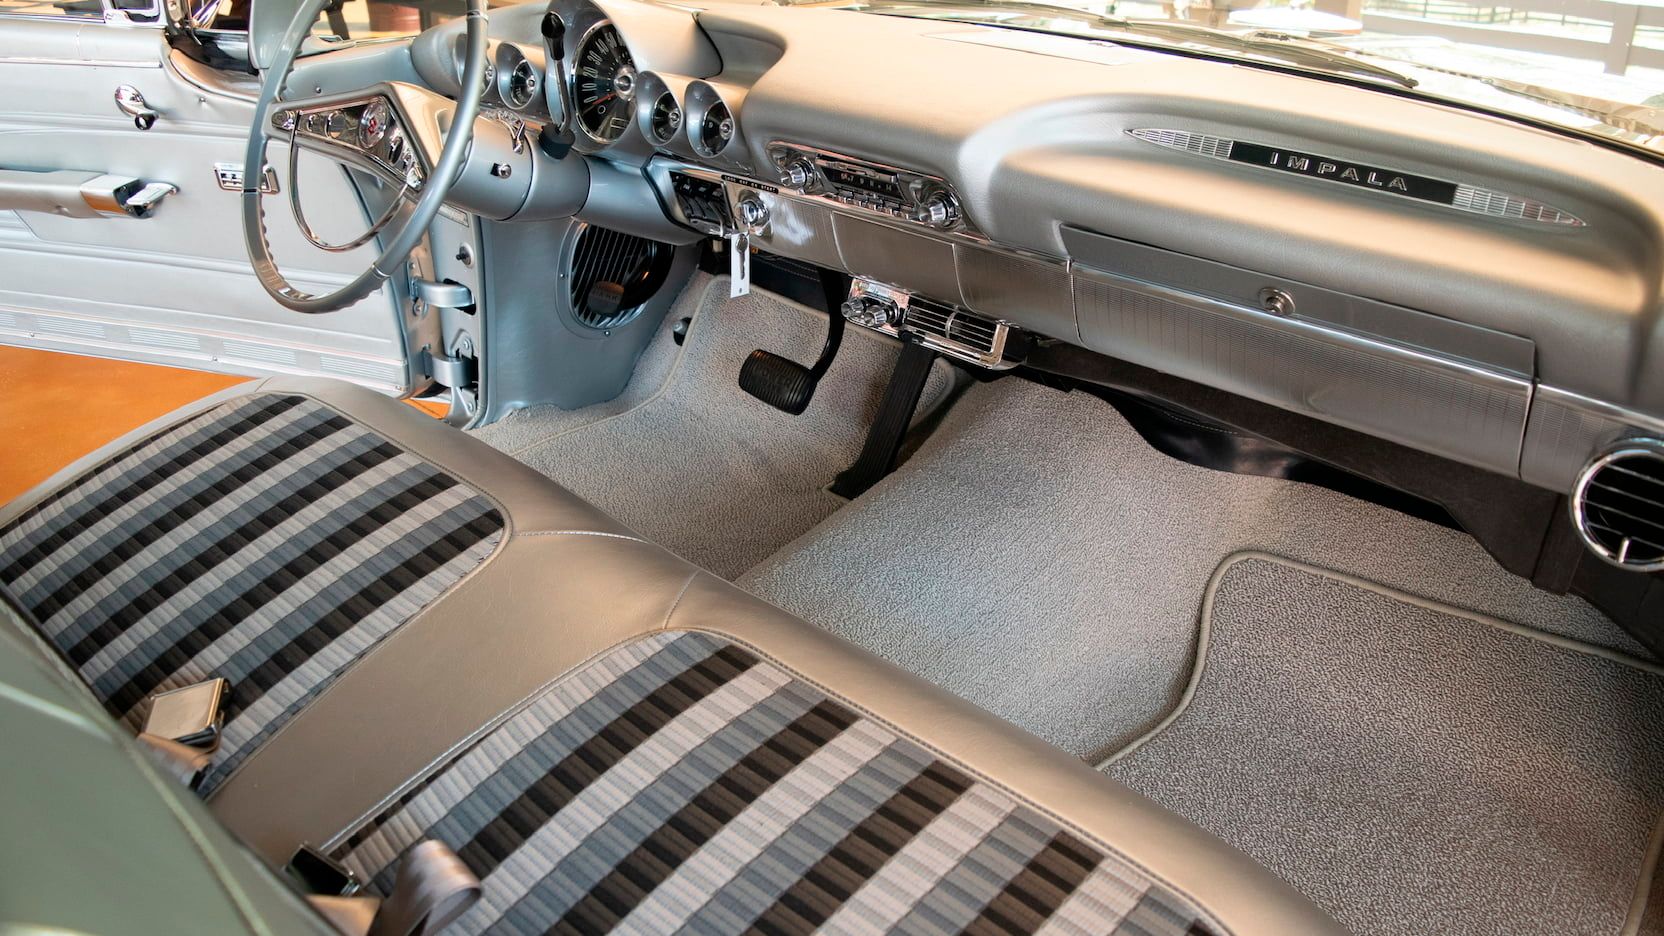 1959 Impala, interior view on passenger's side